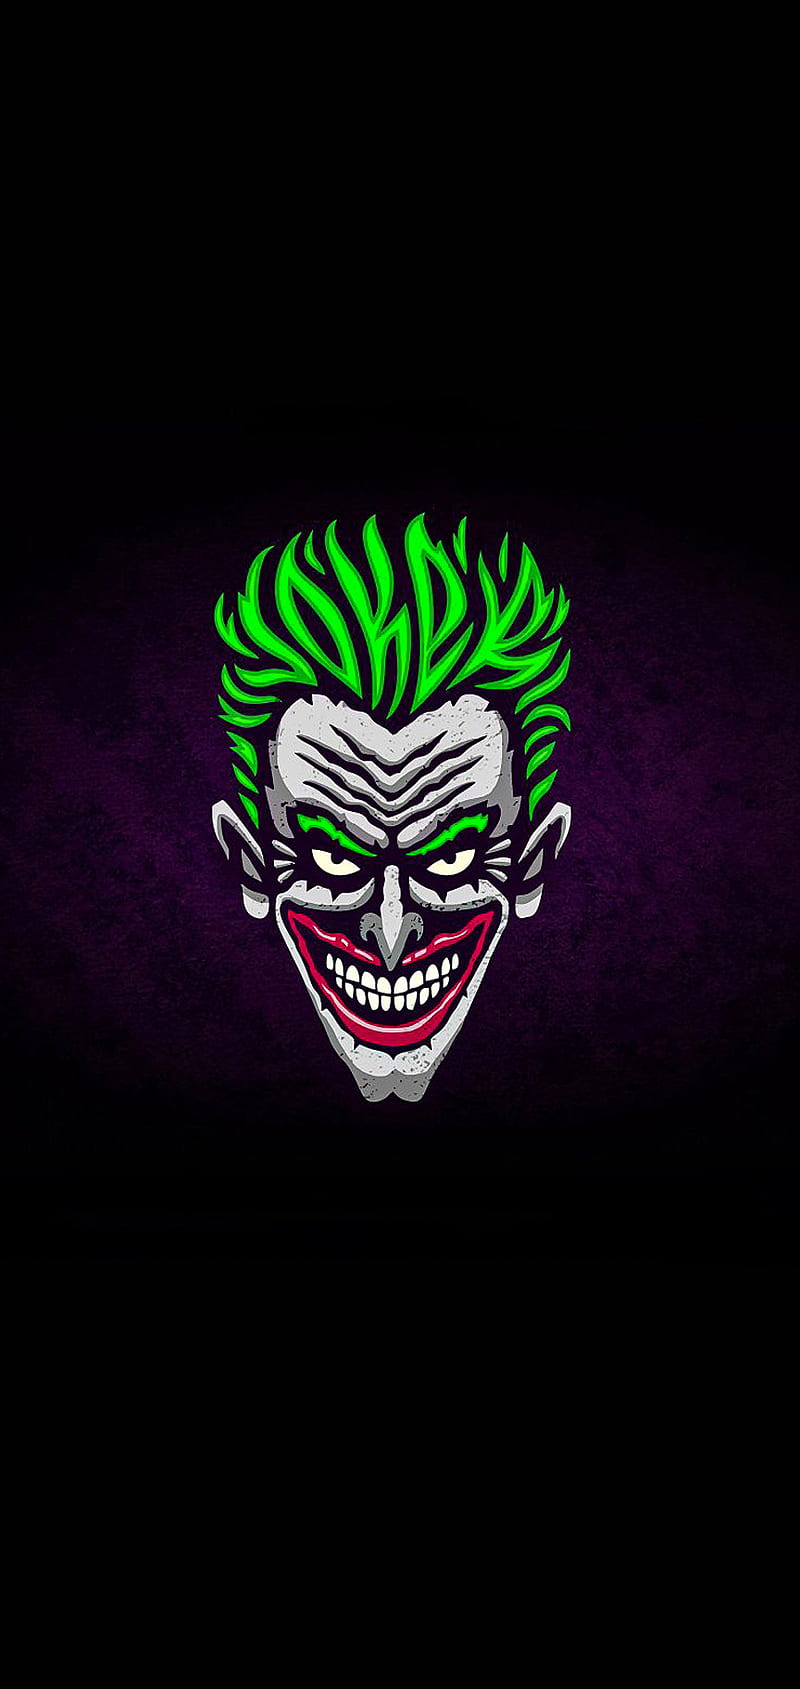 HD Wallpaper Joker (2019 Movie) - Wallpaperforu